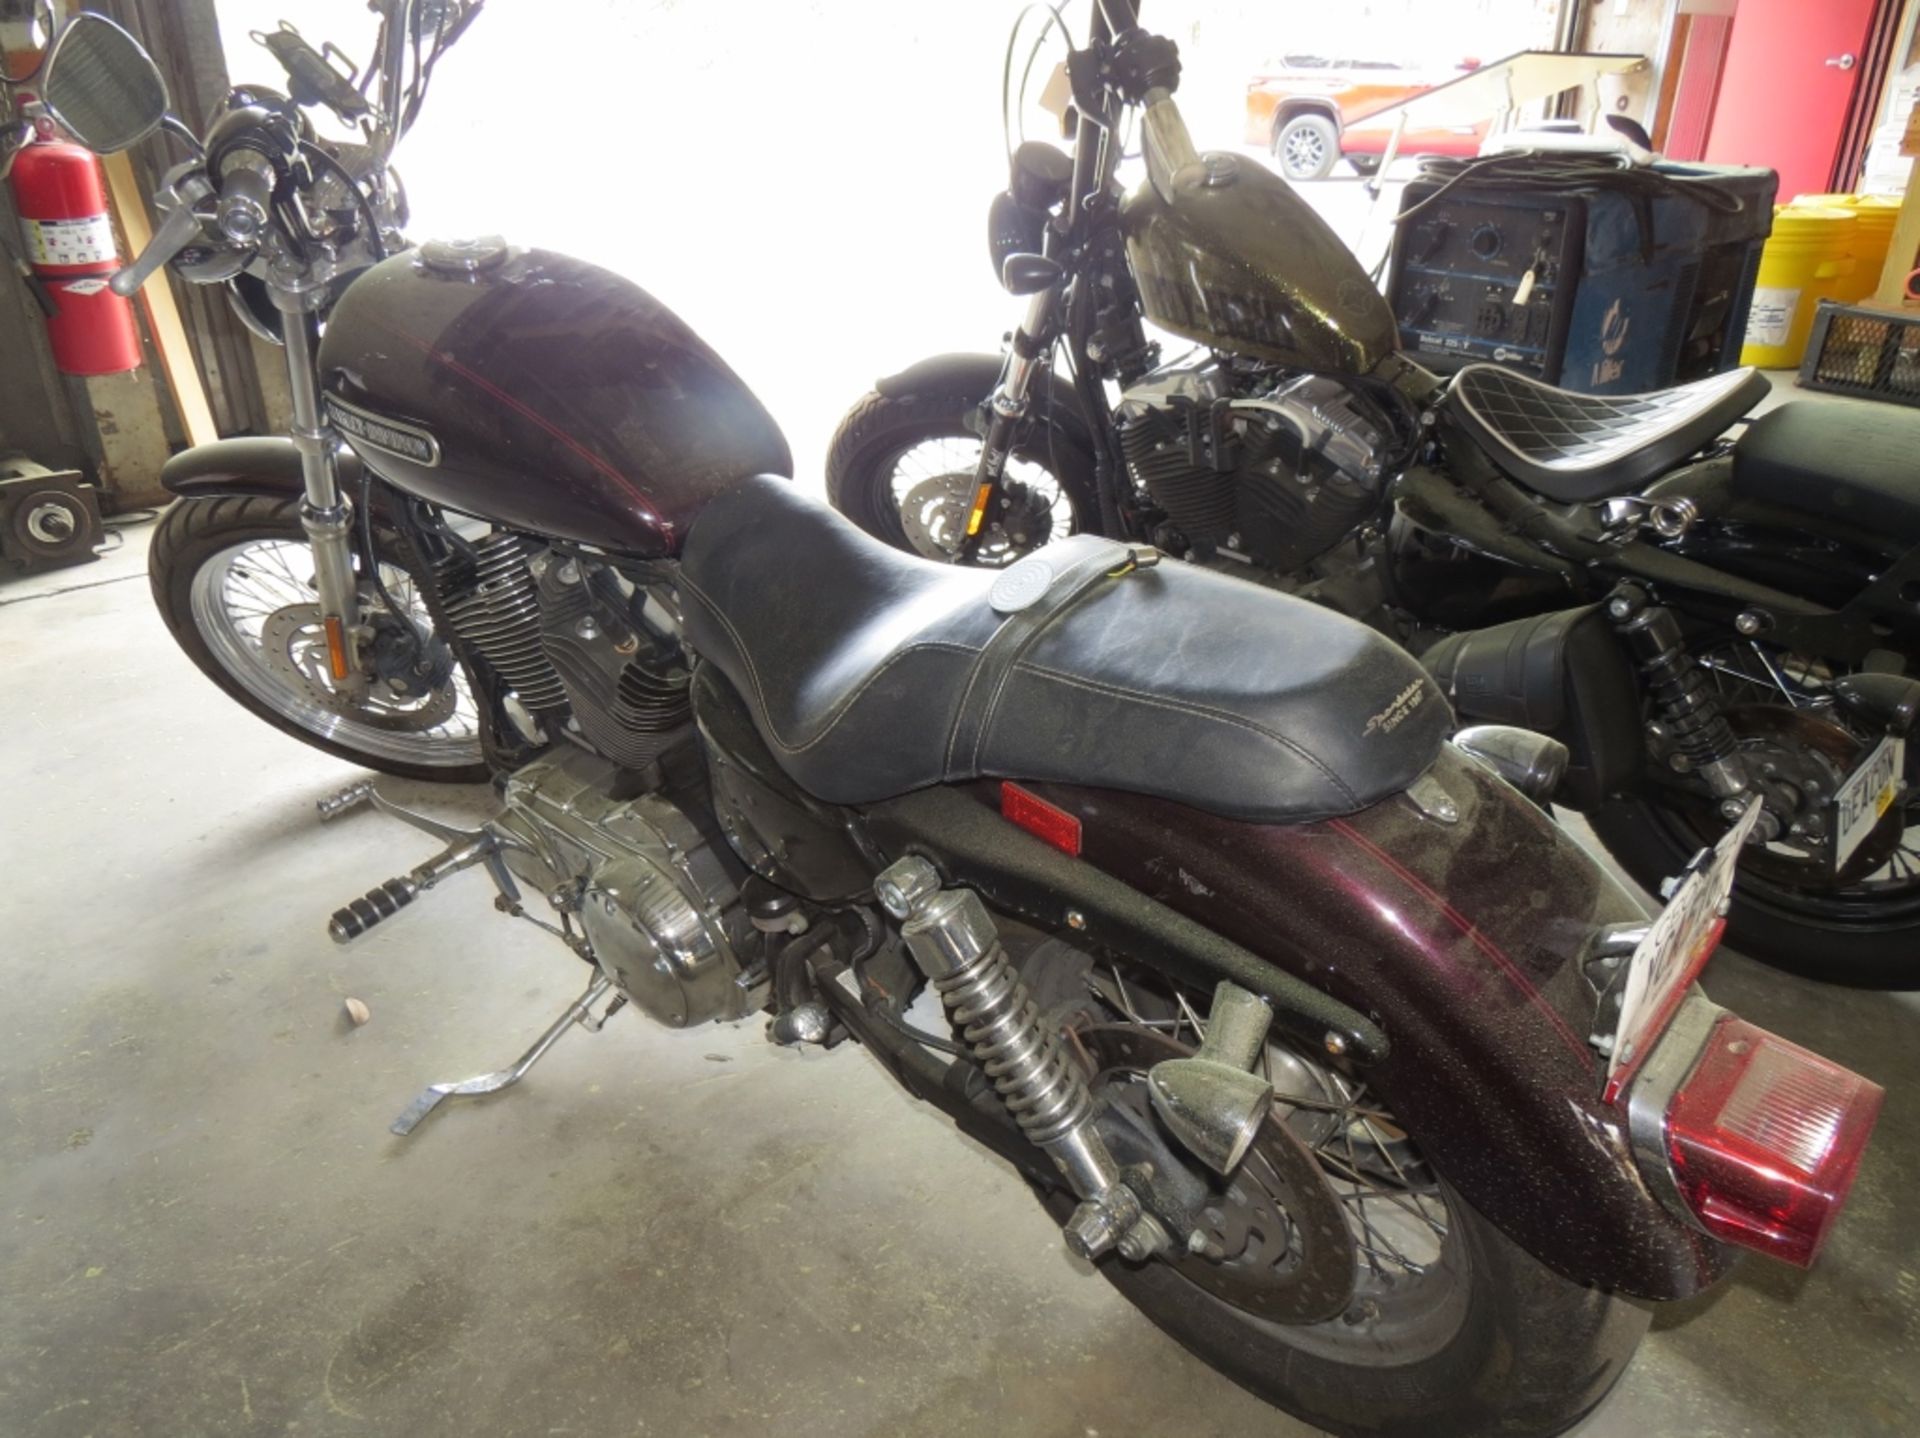 2007 Harley Davidson Sporster XL1200 VIN: 1HD1CX3137K443104 Glittery Garnet in color 16,000 miles - Image 12 of 12